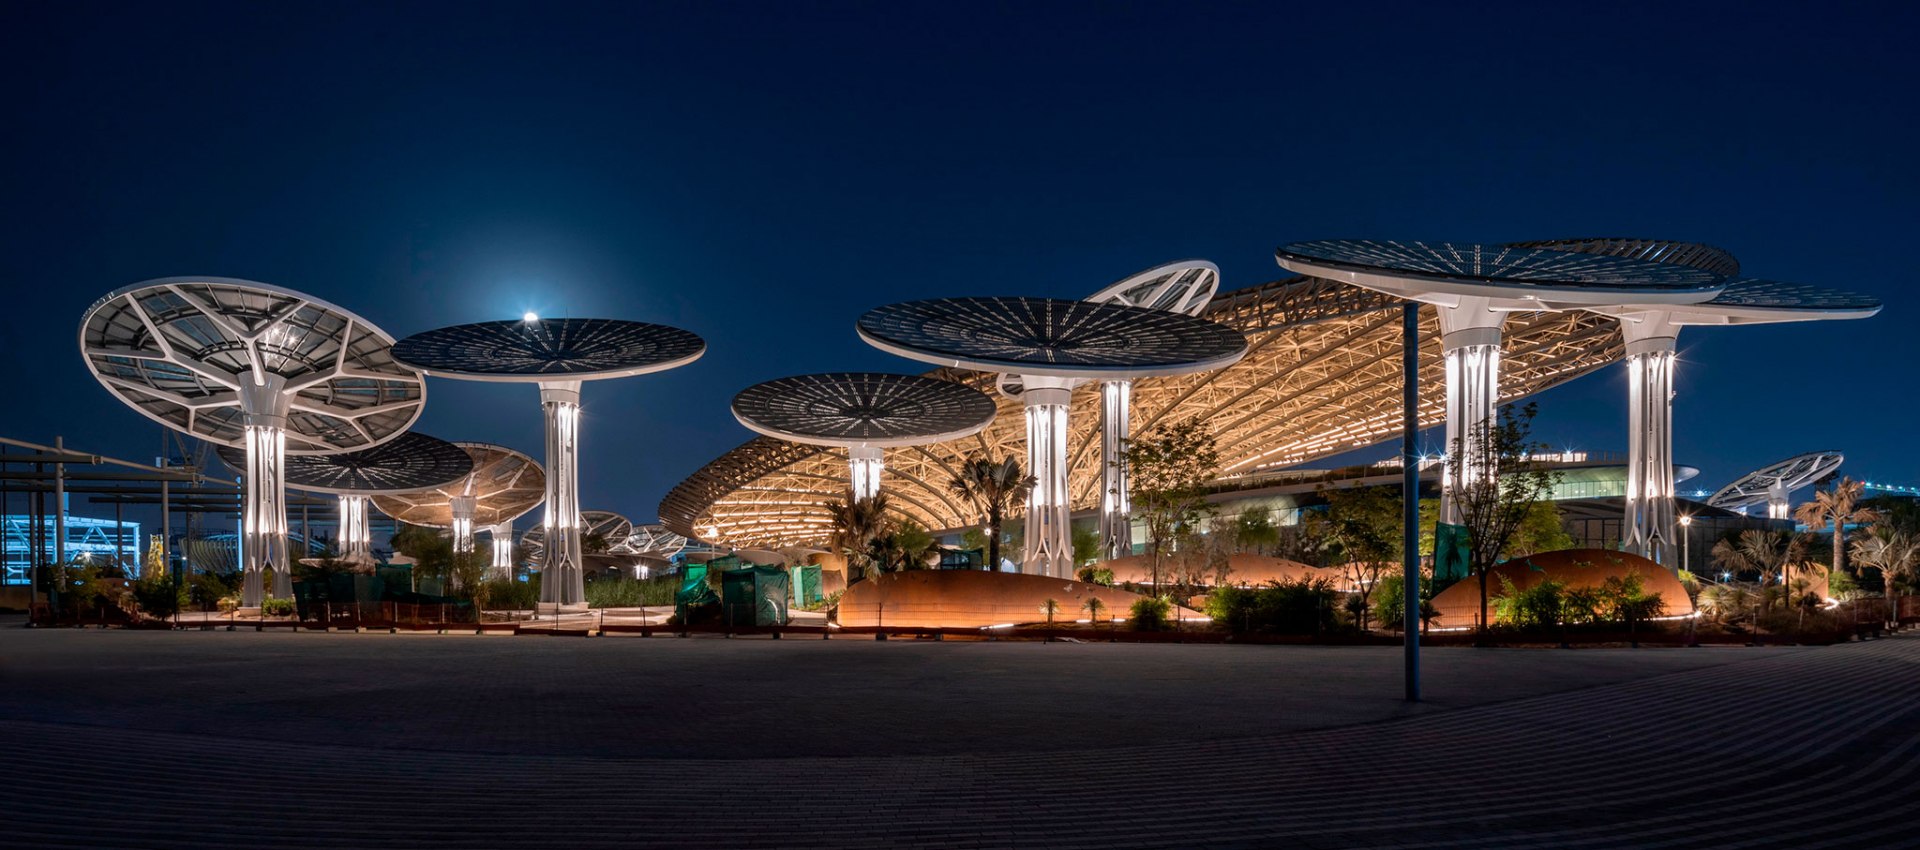 Nautical pavilion promotes sustainability in Dubai